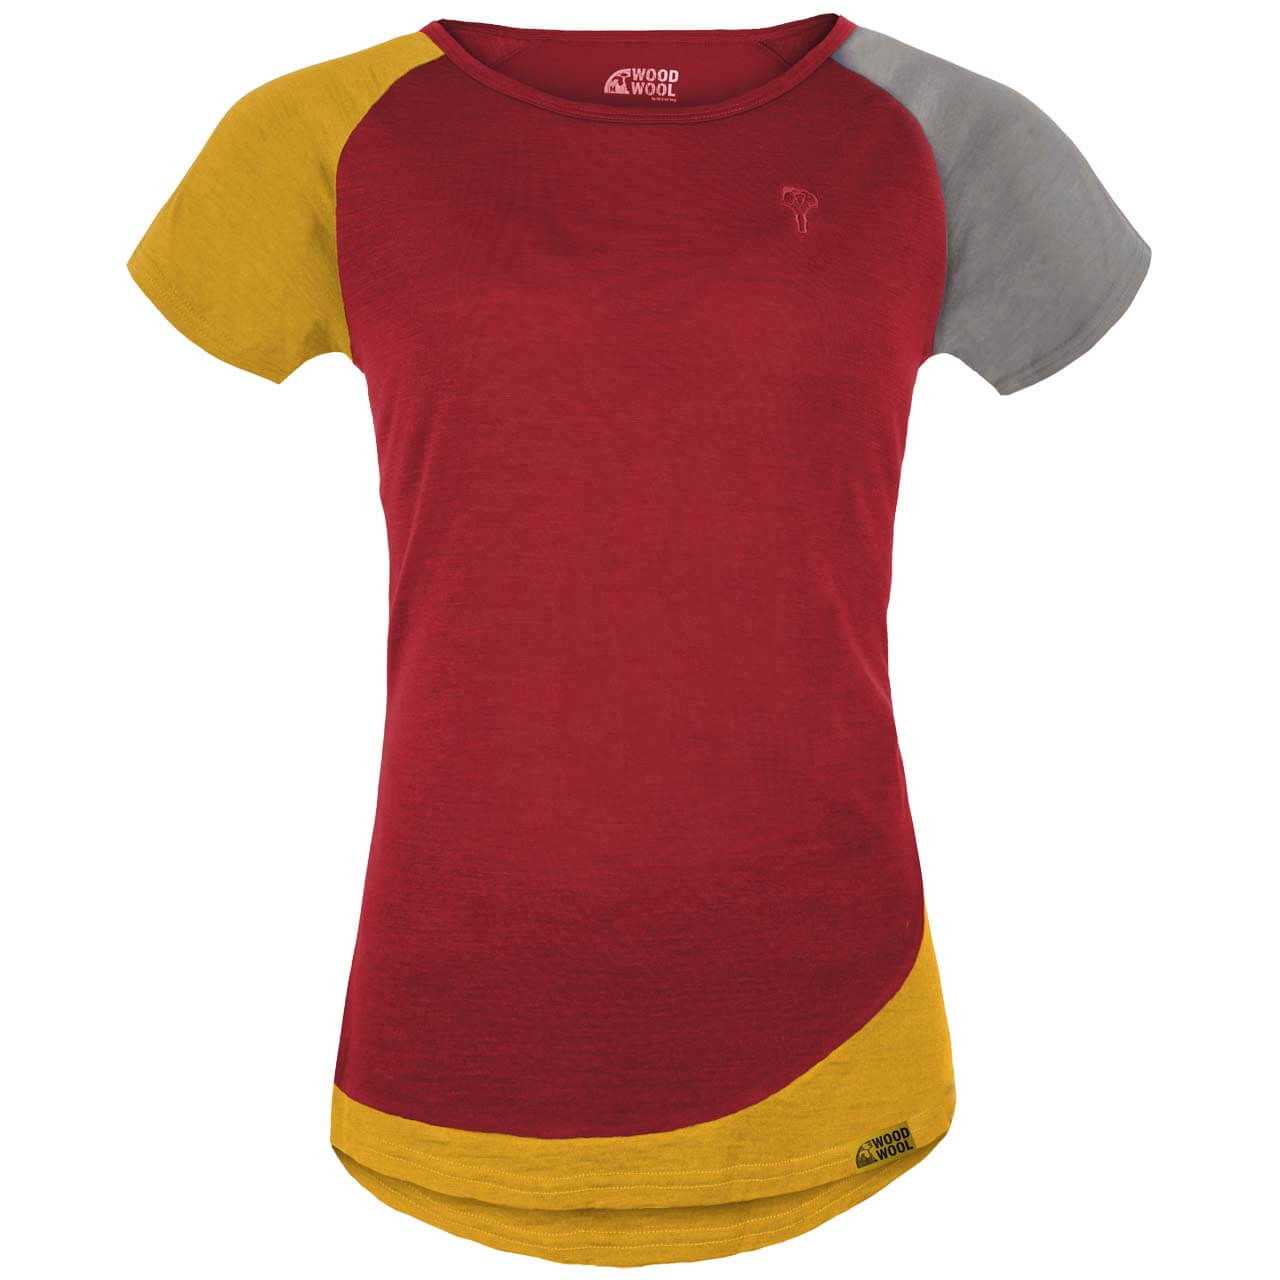 Grüezi Bag WoodWool Janeway T-Shirt - Fired Red Brick, S von Grüezi Bag}